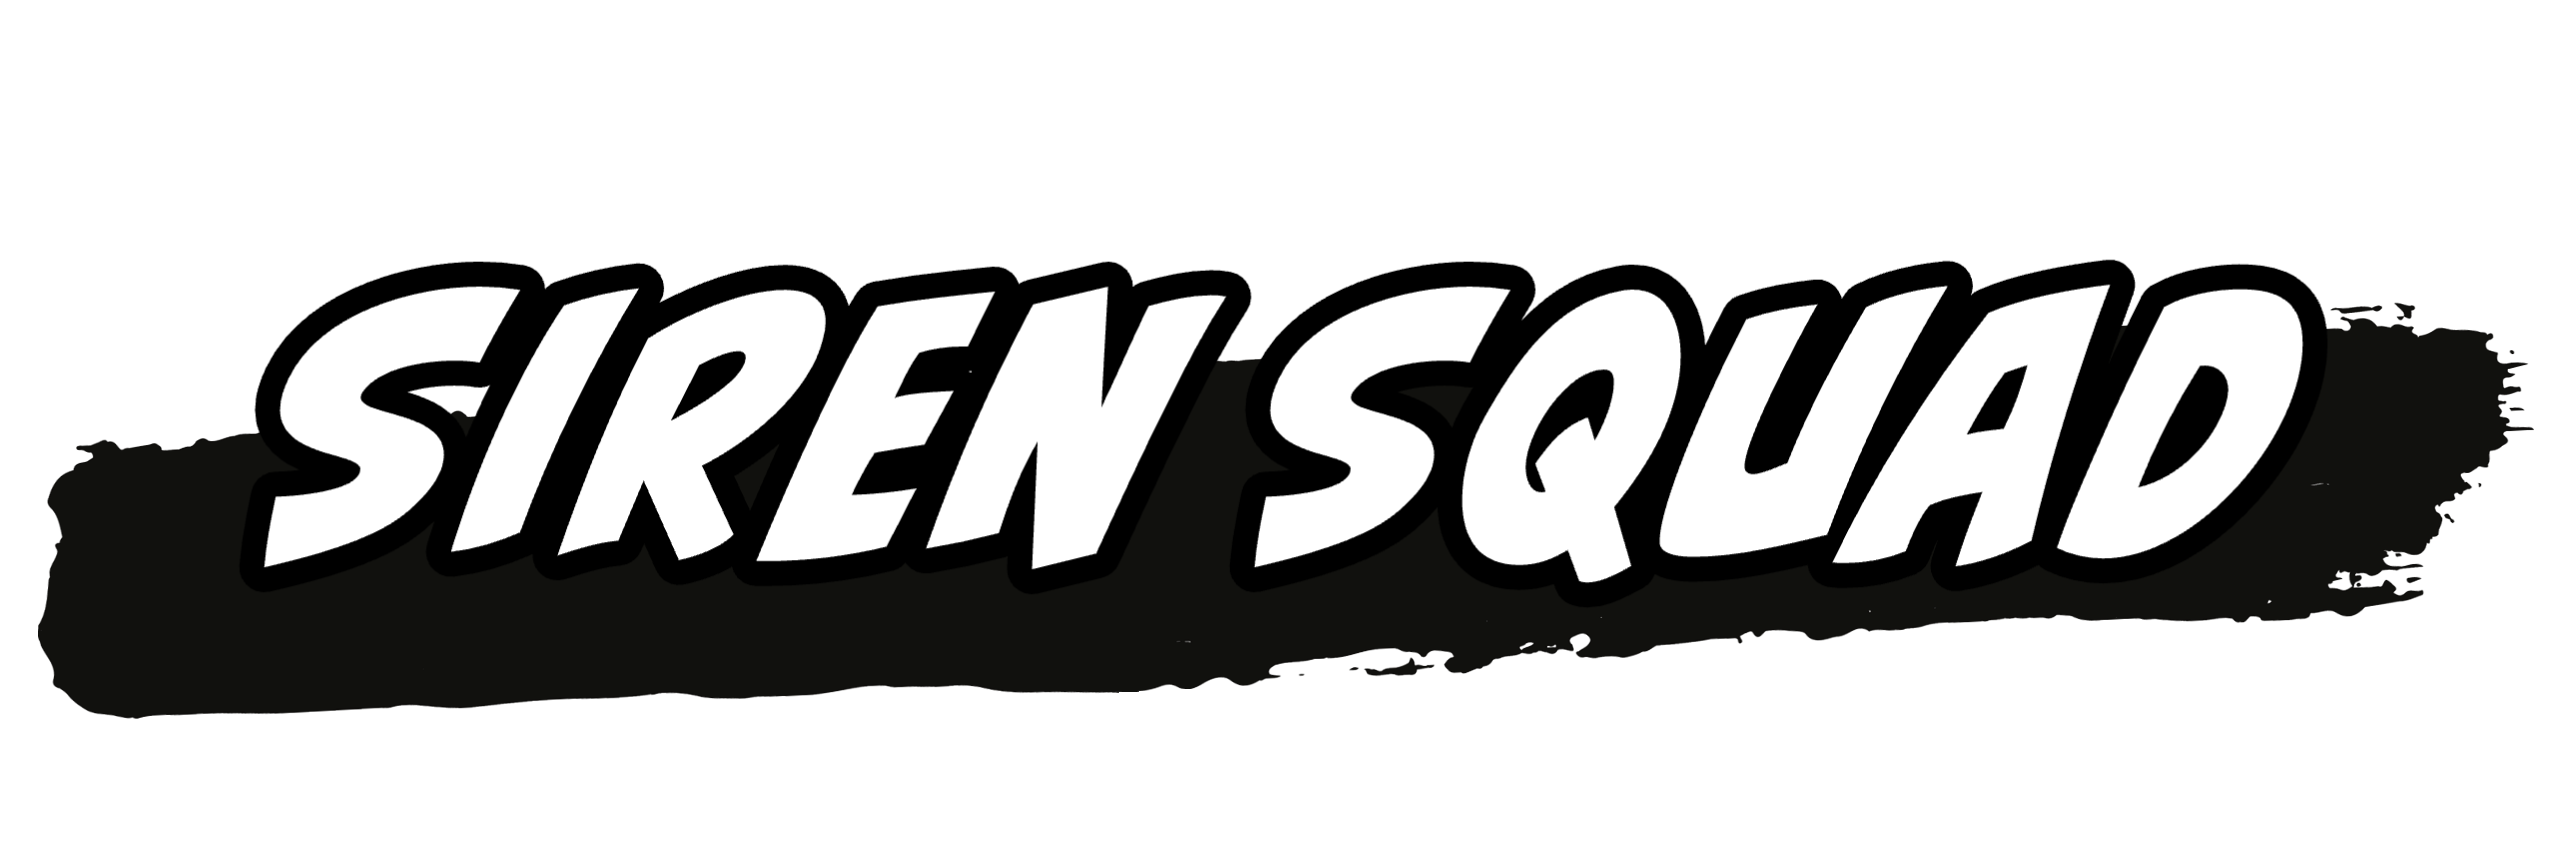 Siren squad logo